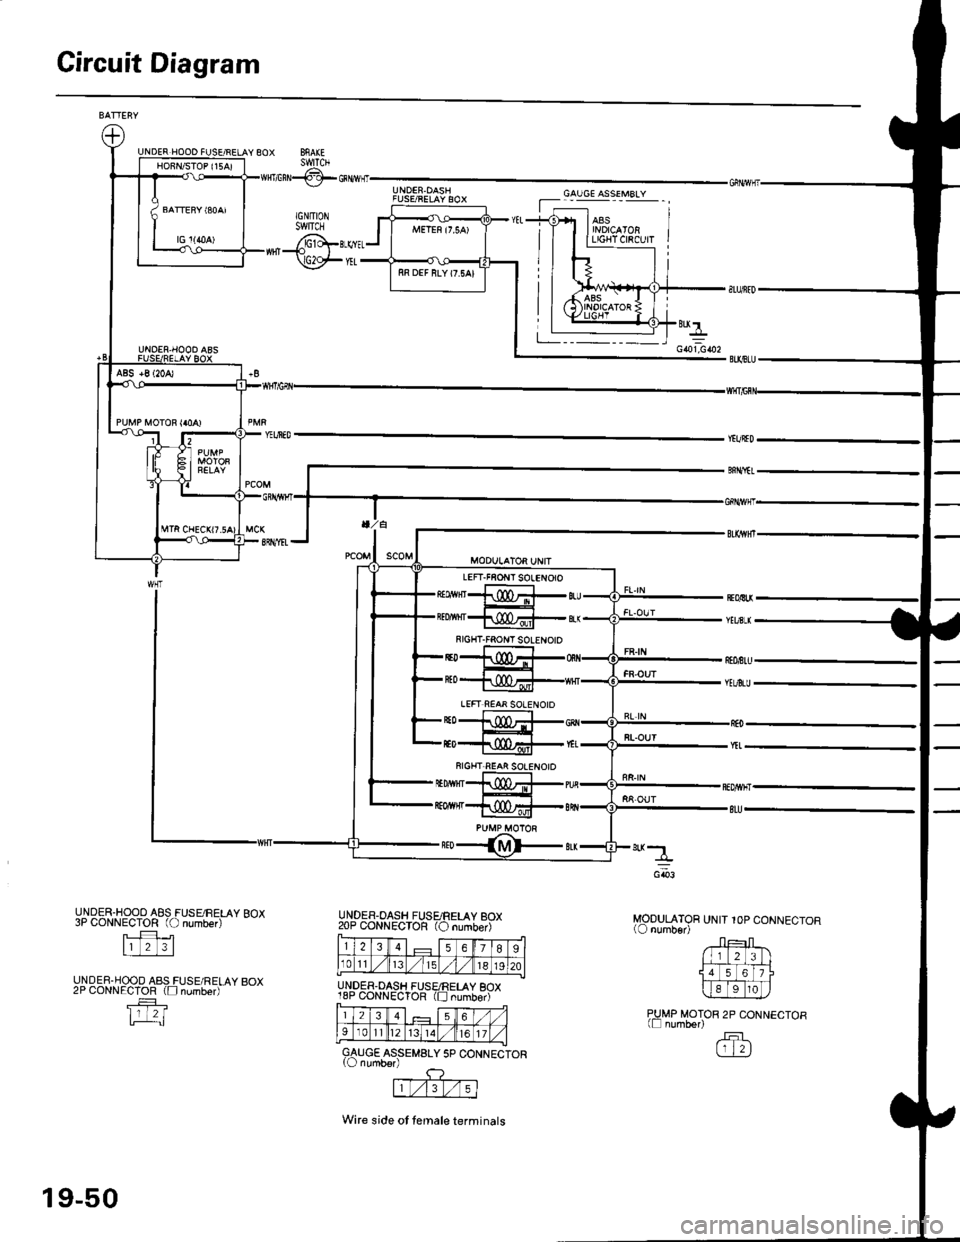 HONDA CIVIC 1998 6.G Service Manual Gircuit Diagram
MOOULATOR UNIT IOP CONNECTOR
zrJrF!_lll 2 3ll
14TiEltl
c@4
PIMP MOTOR 2P CONNECTOR(Ll number)fFlGTN
UNDER.HOOO A8S FUSE,/FELAY BOX3P CONNECTOR (O number)
| 2 3l
UNDER.HOOD AAS FUSE/REL